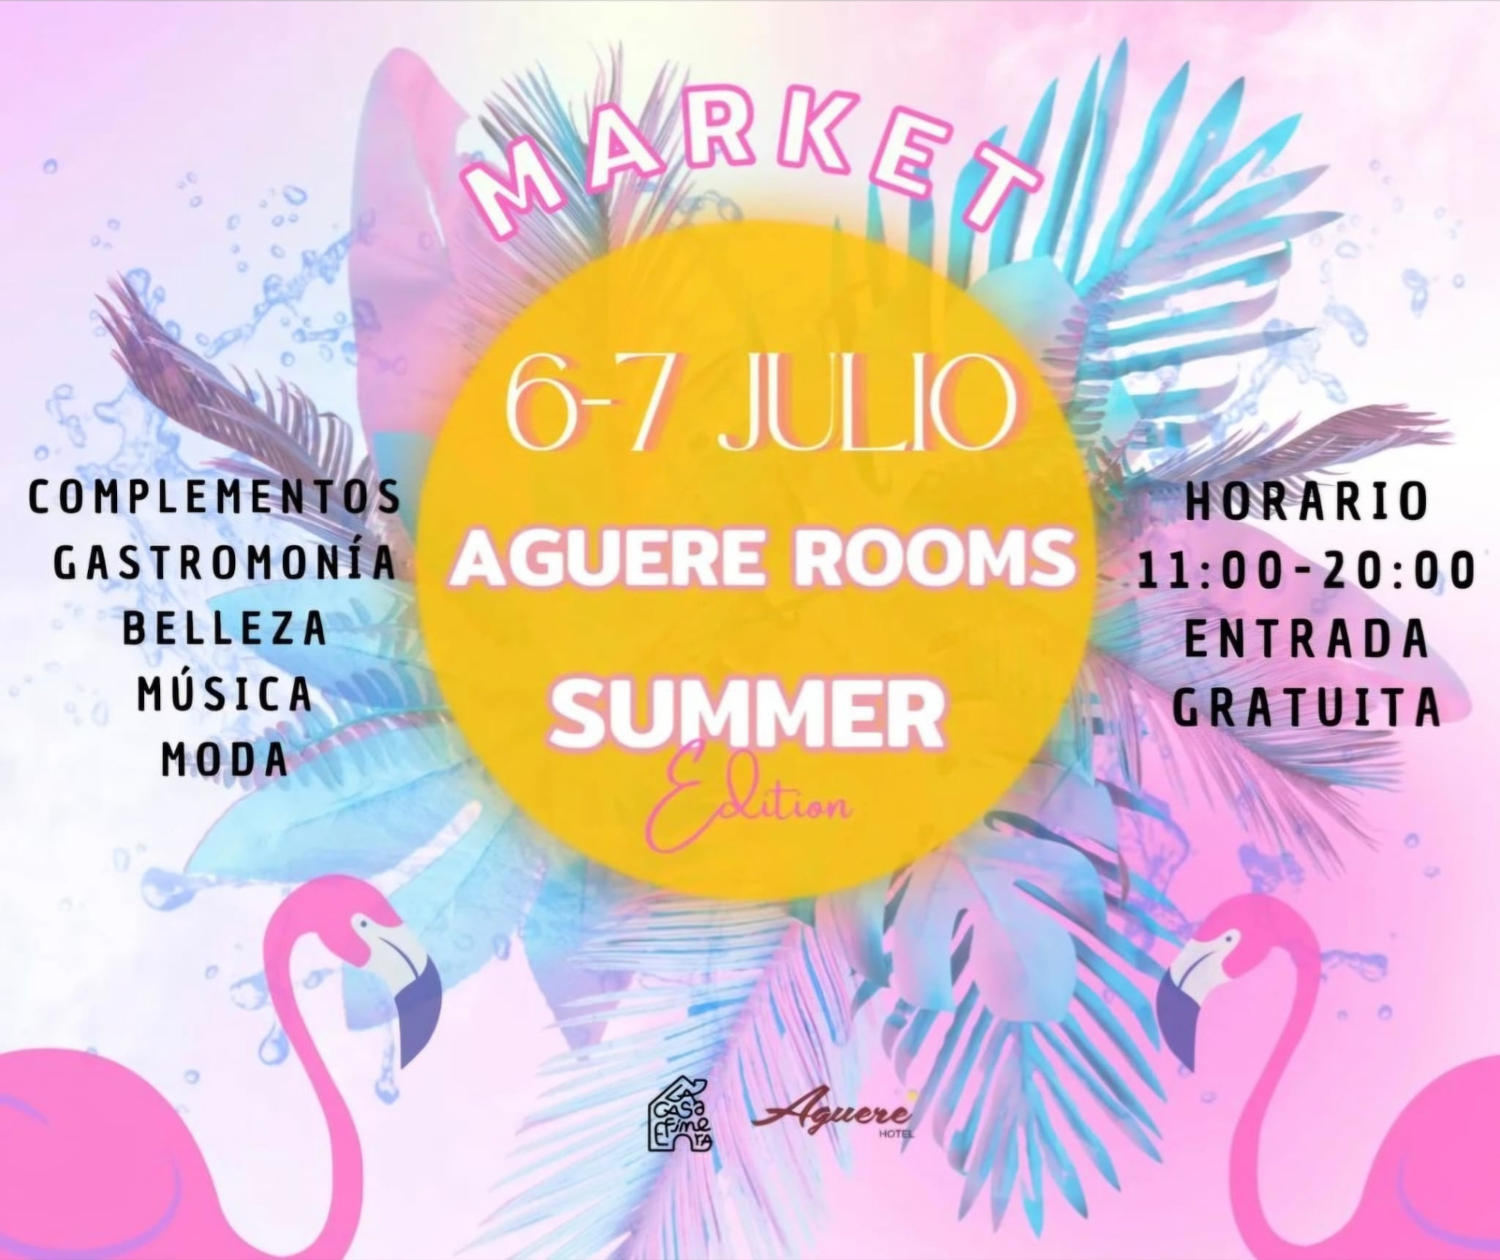 Cartel del evento "Aguere Rooms Summer Edition"